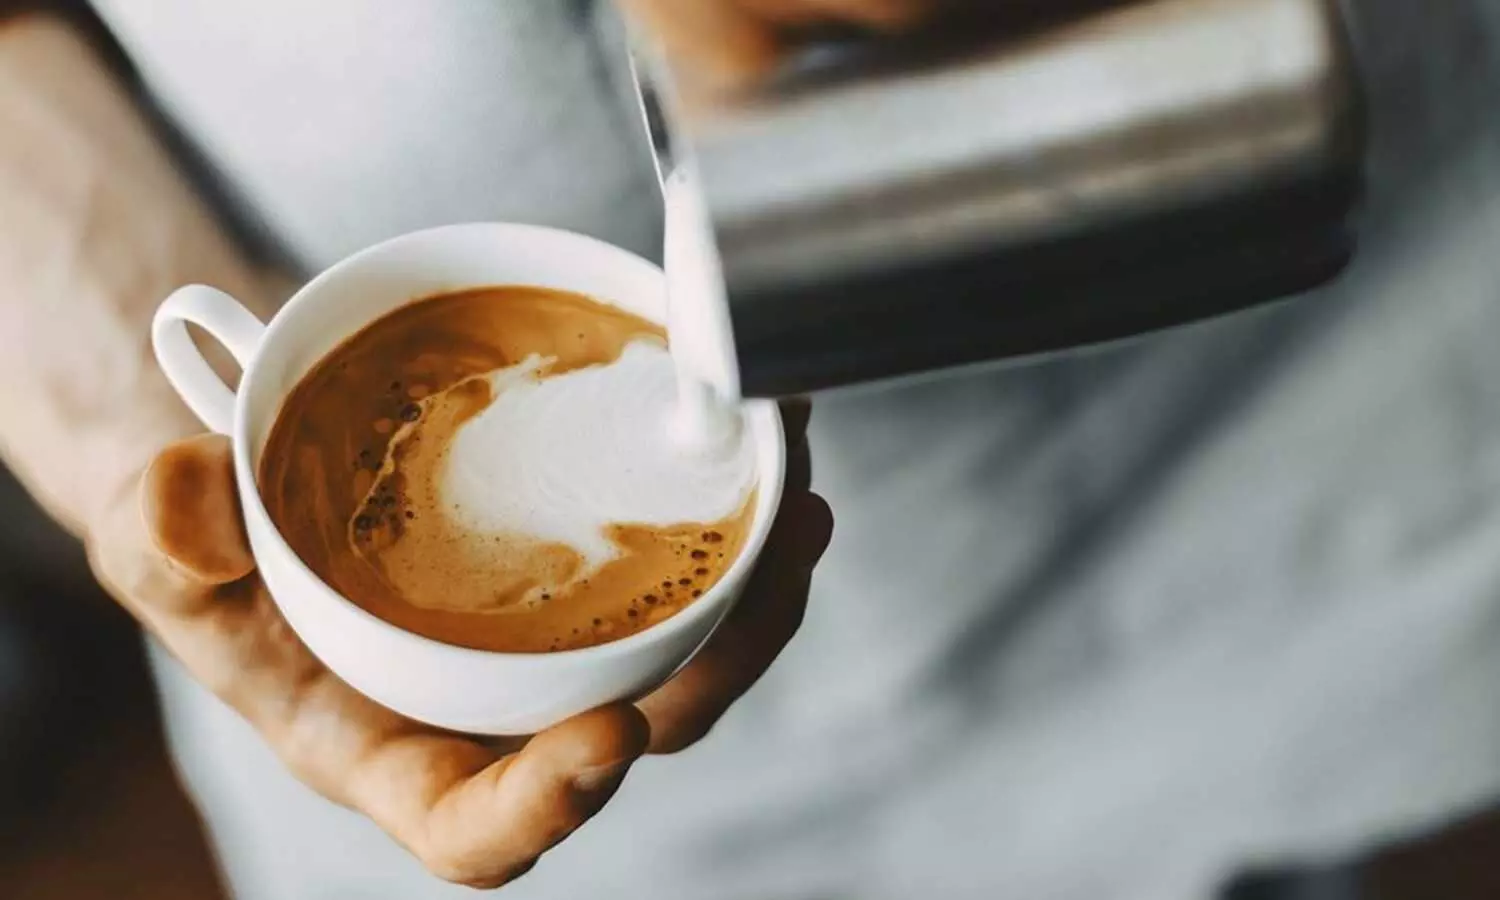 Milk addition to coffee may exert anti-inflammatory effect: Study